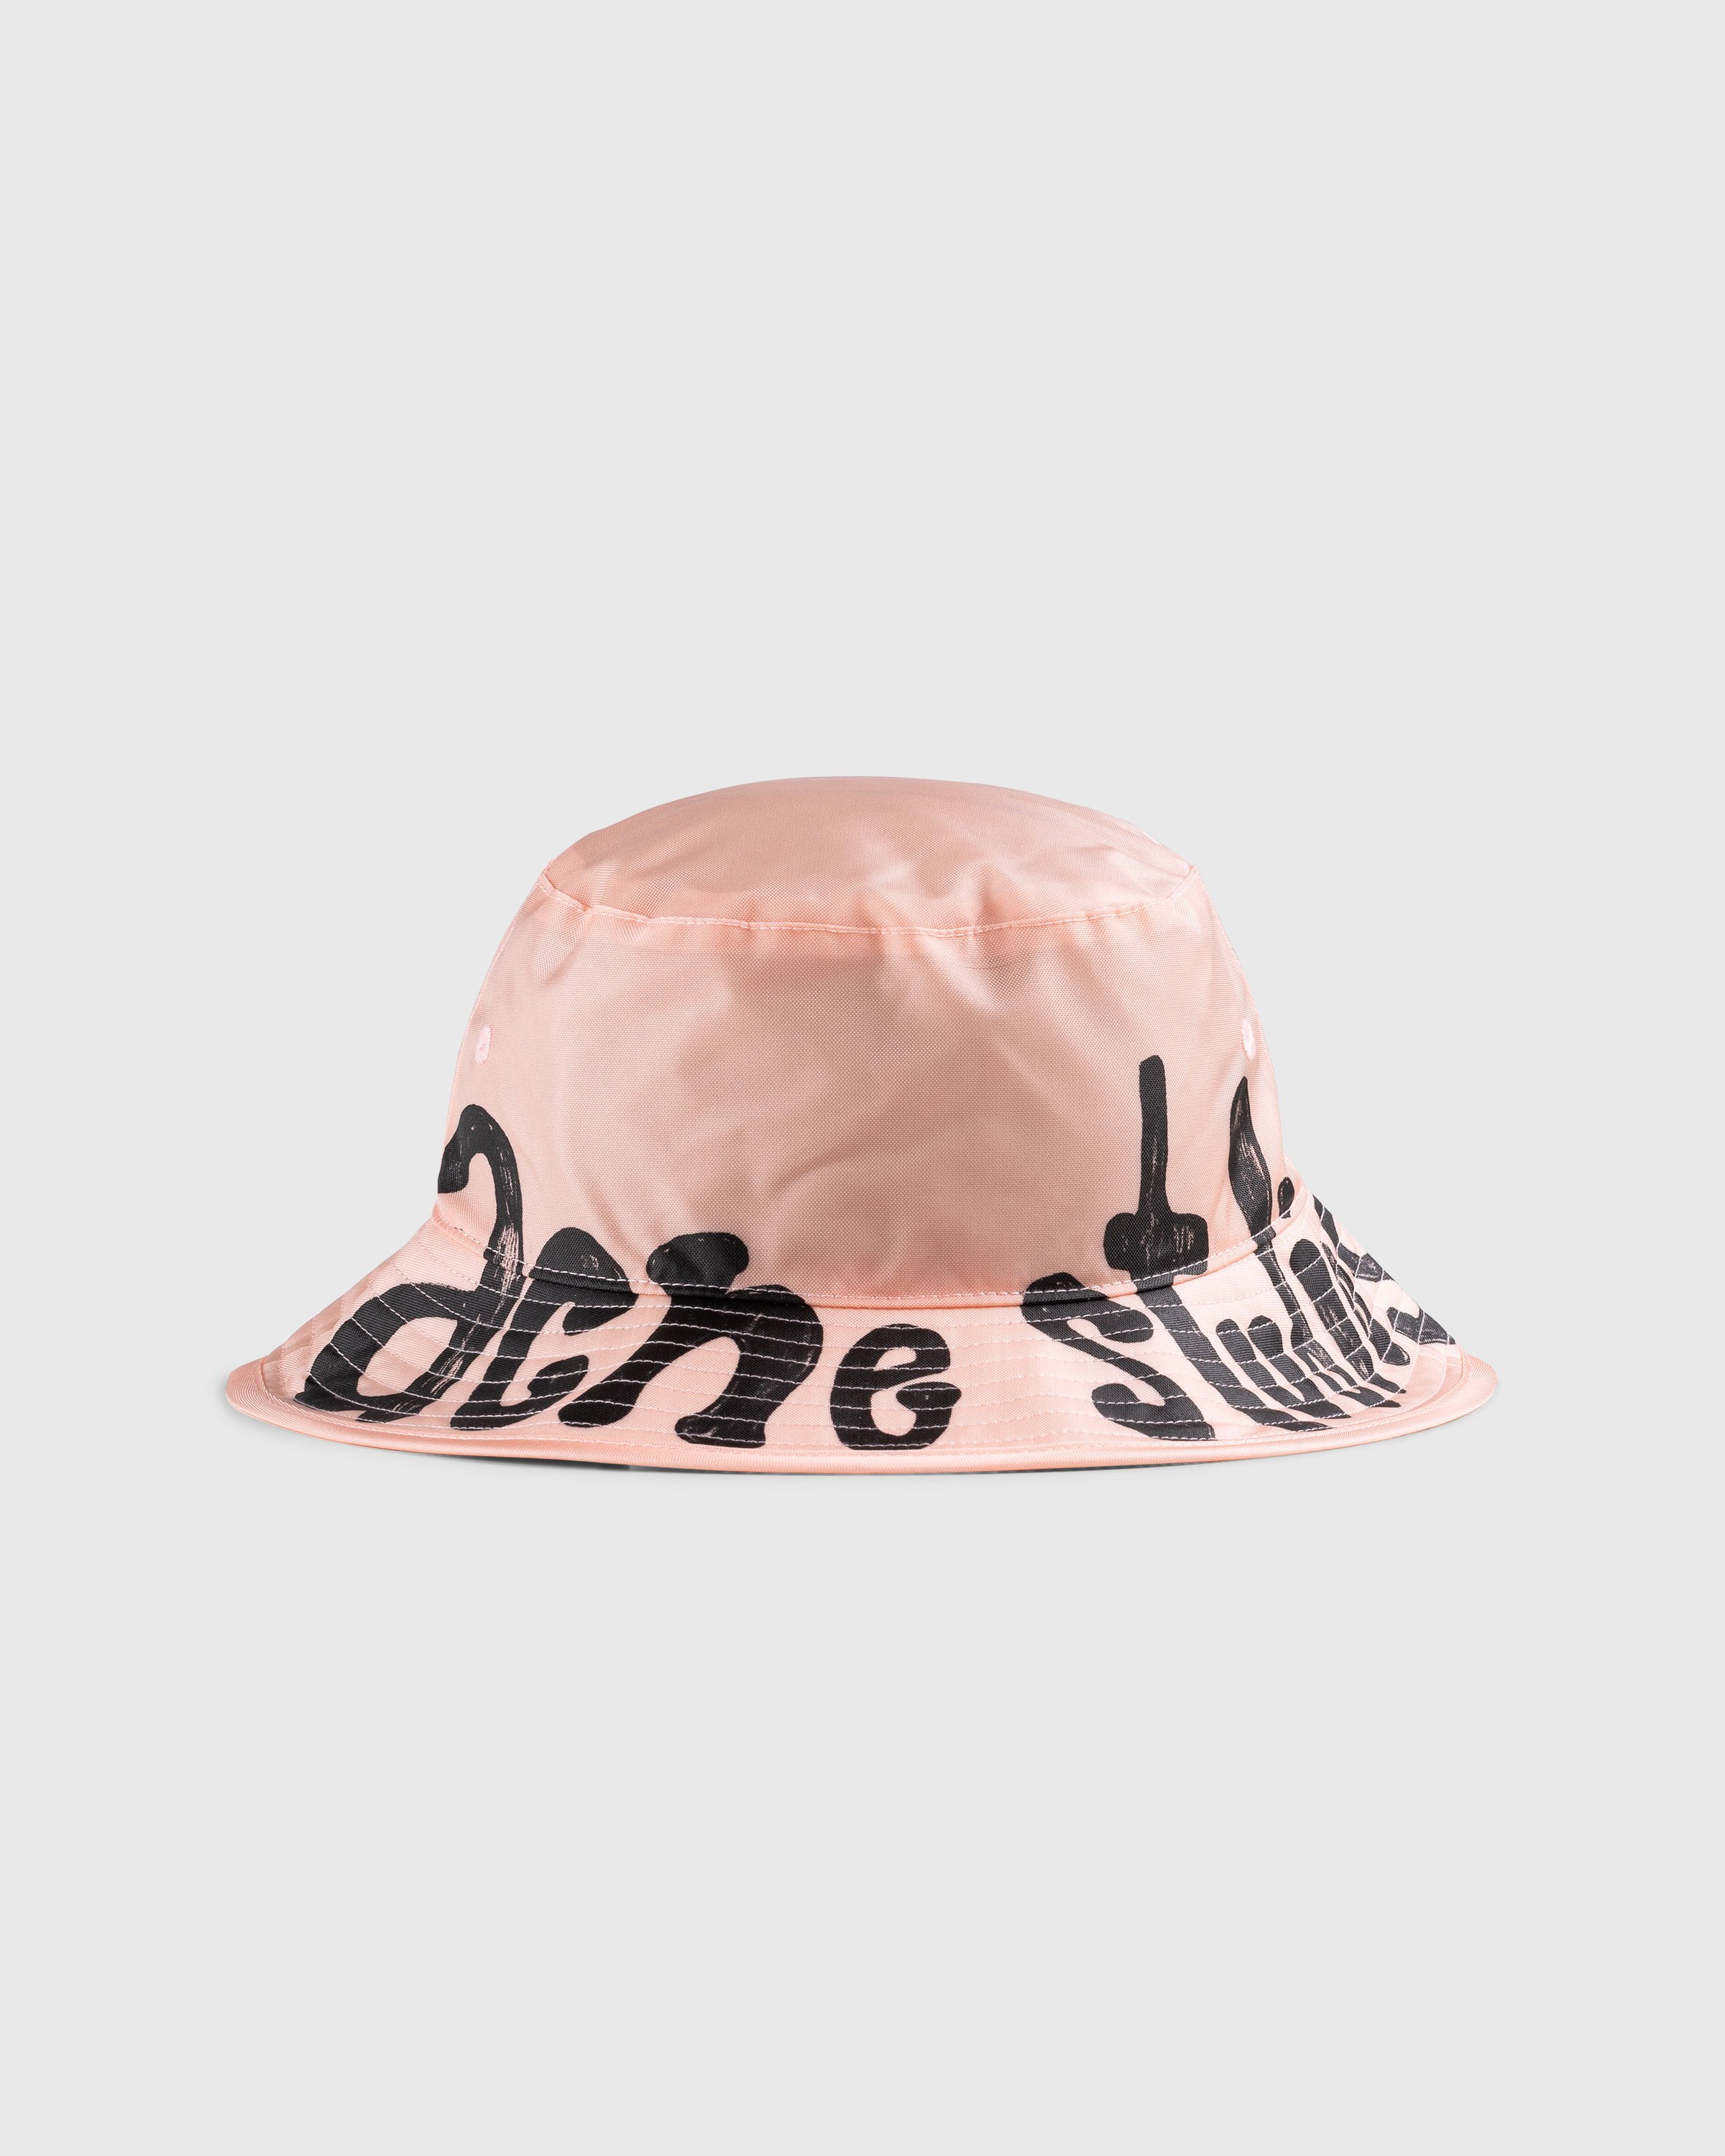 Acne Studios - Logo Bucket Hat Peach Pink - Accessories - Pink - Image 1